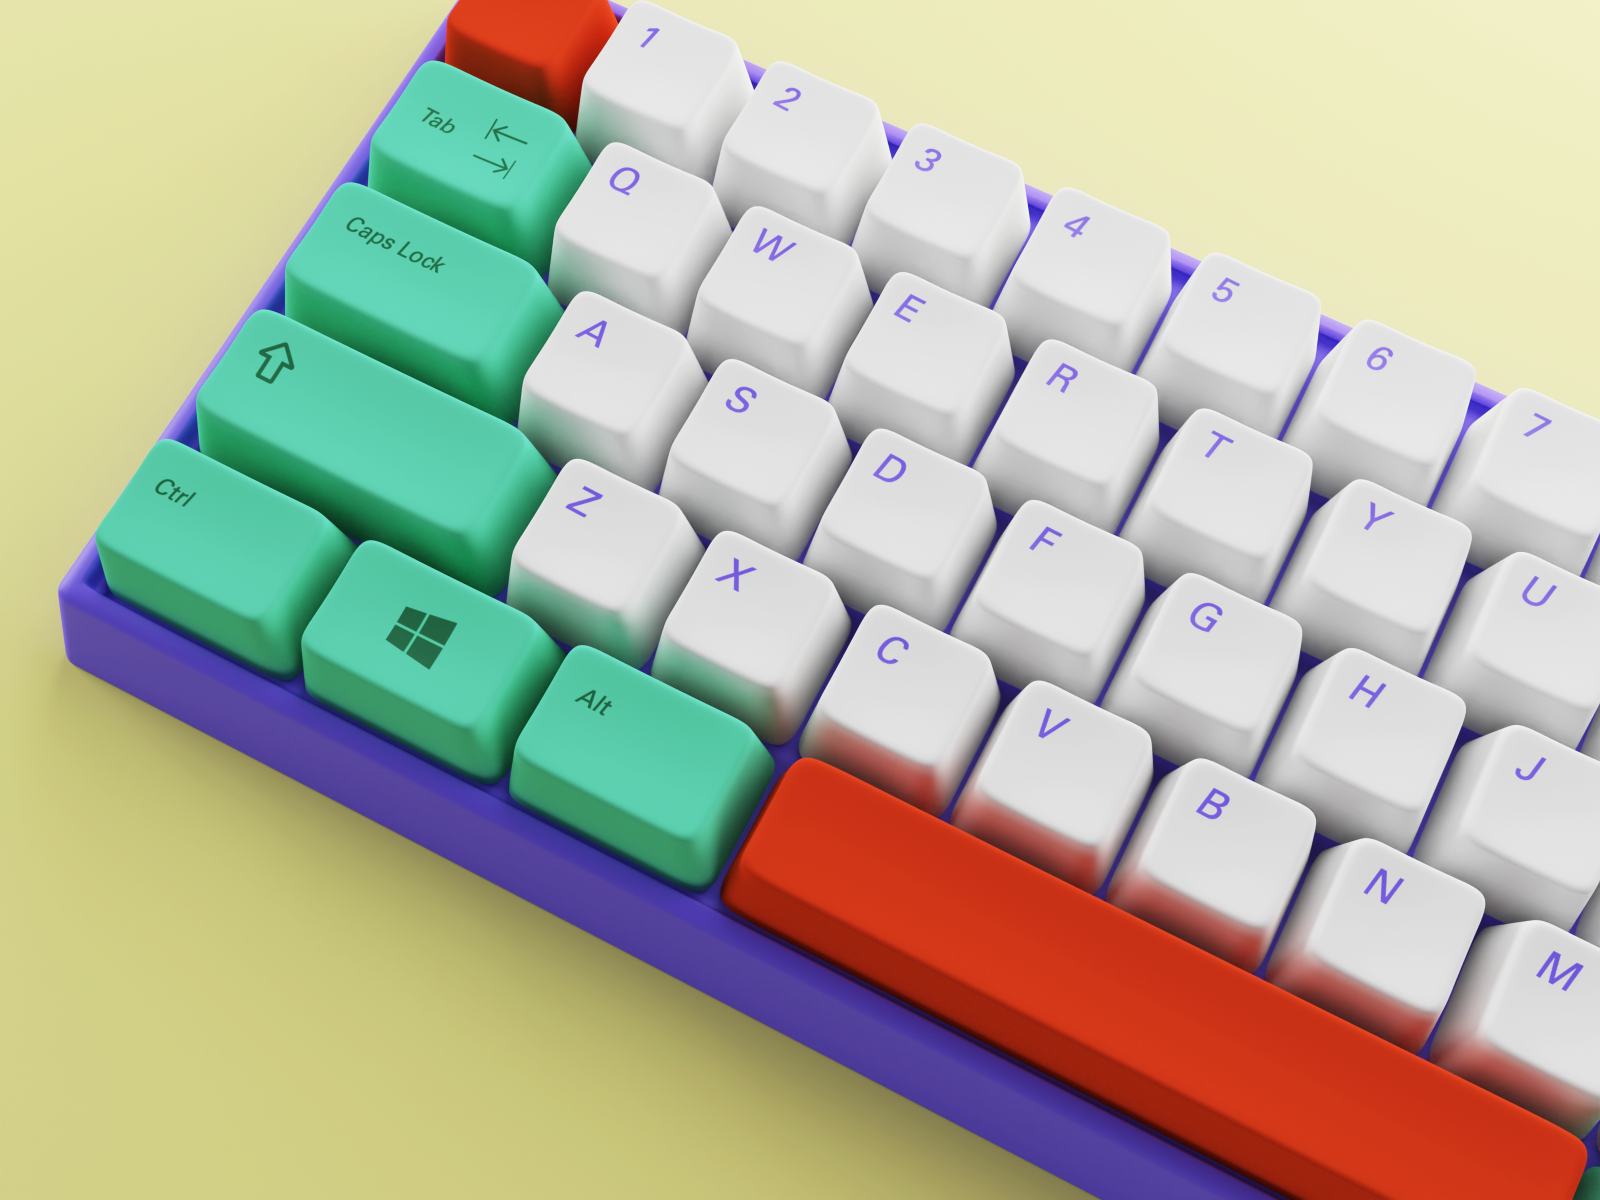 Keyboard - Custom Scene